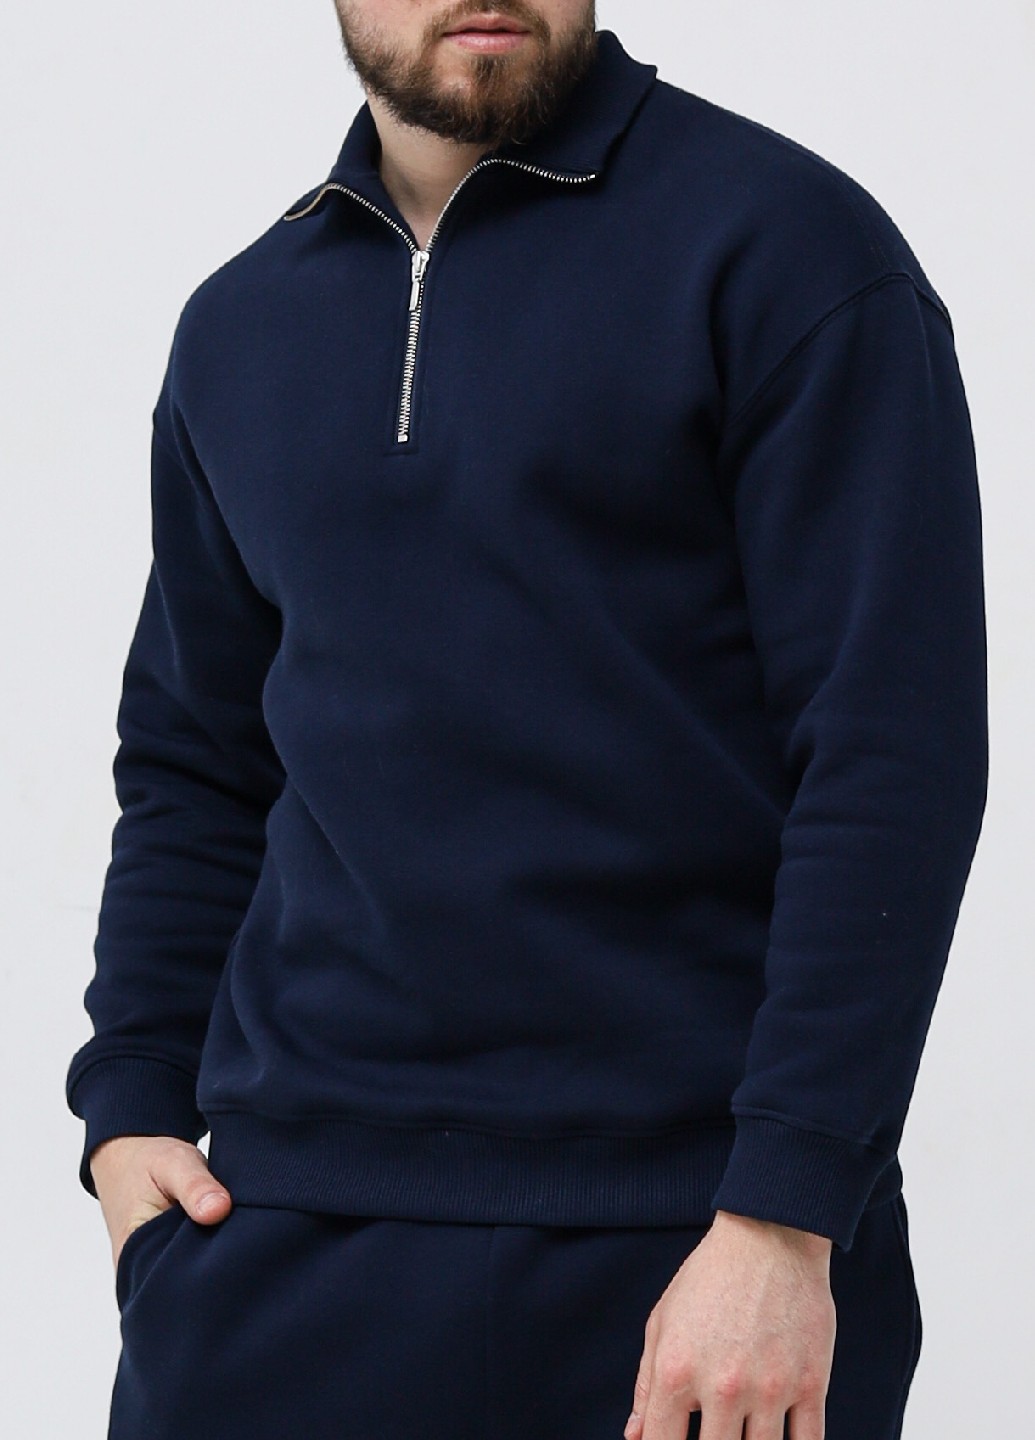 Winter Quarter-Zip cotton Sweater with fleece | Soft Pullover with collar | Dark blue color | Made in Ukraine | Rebellis